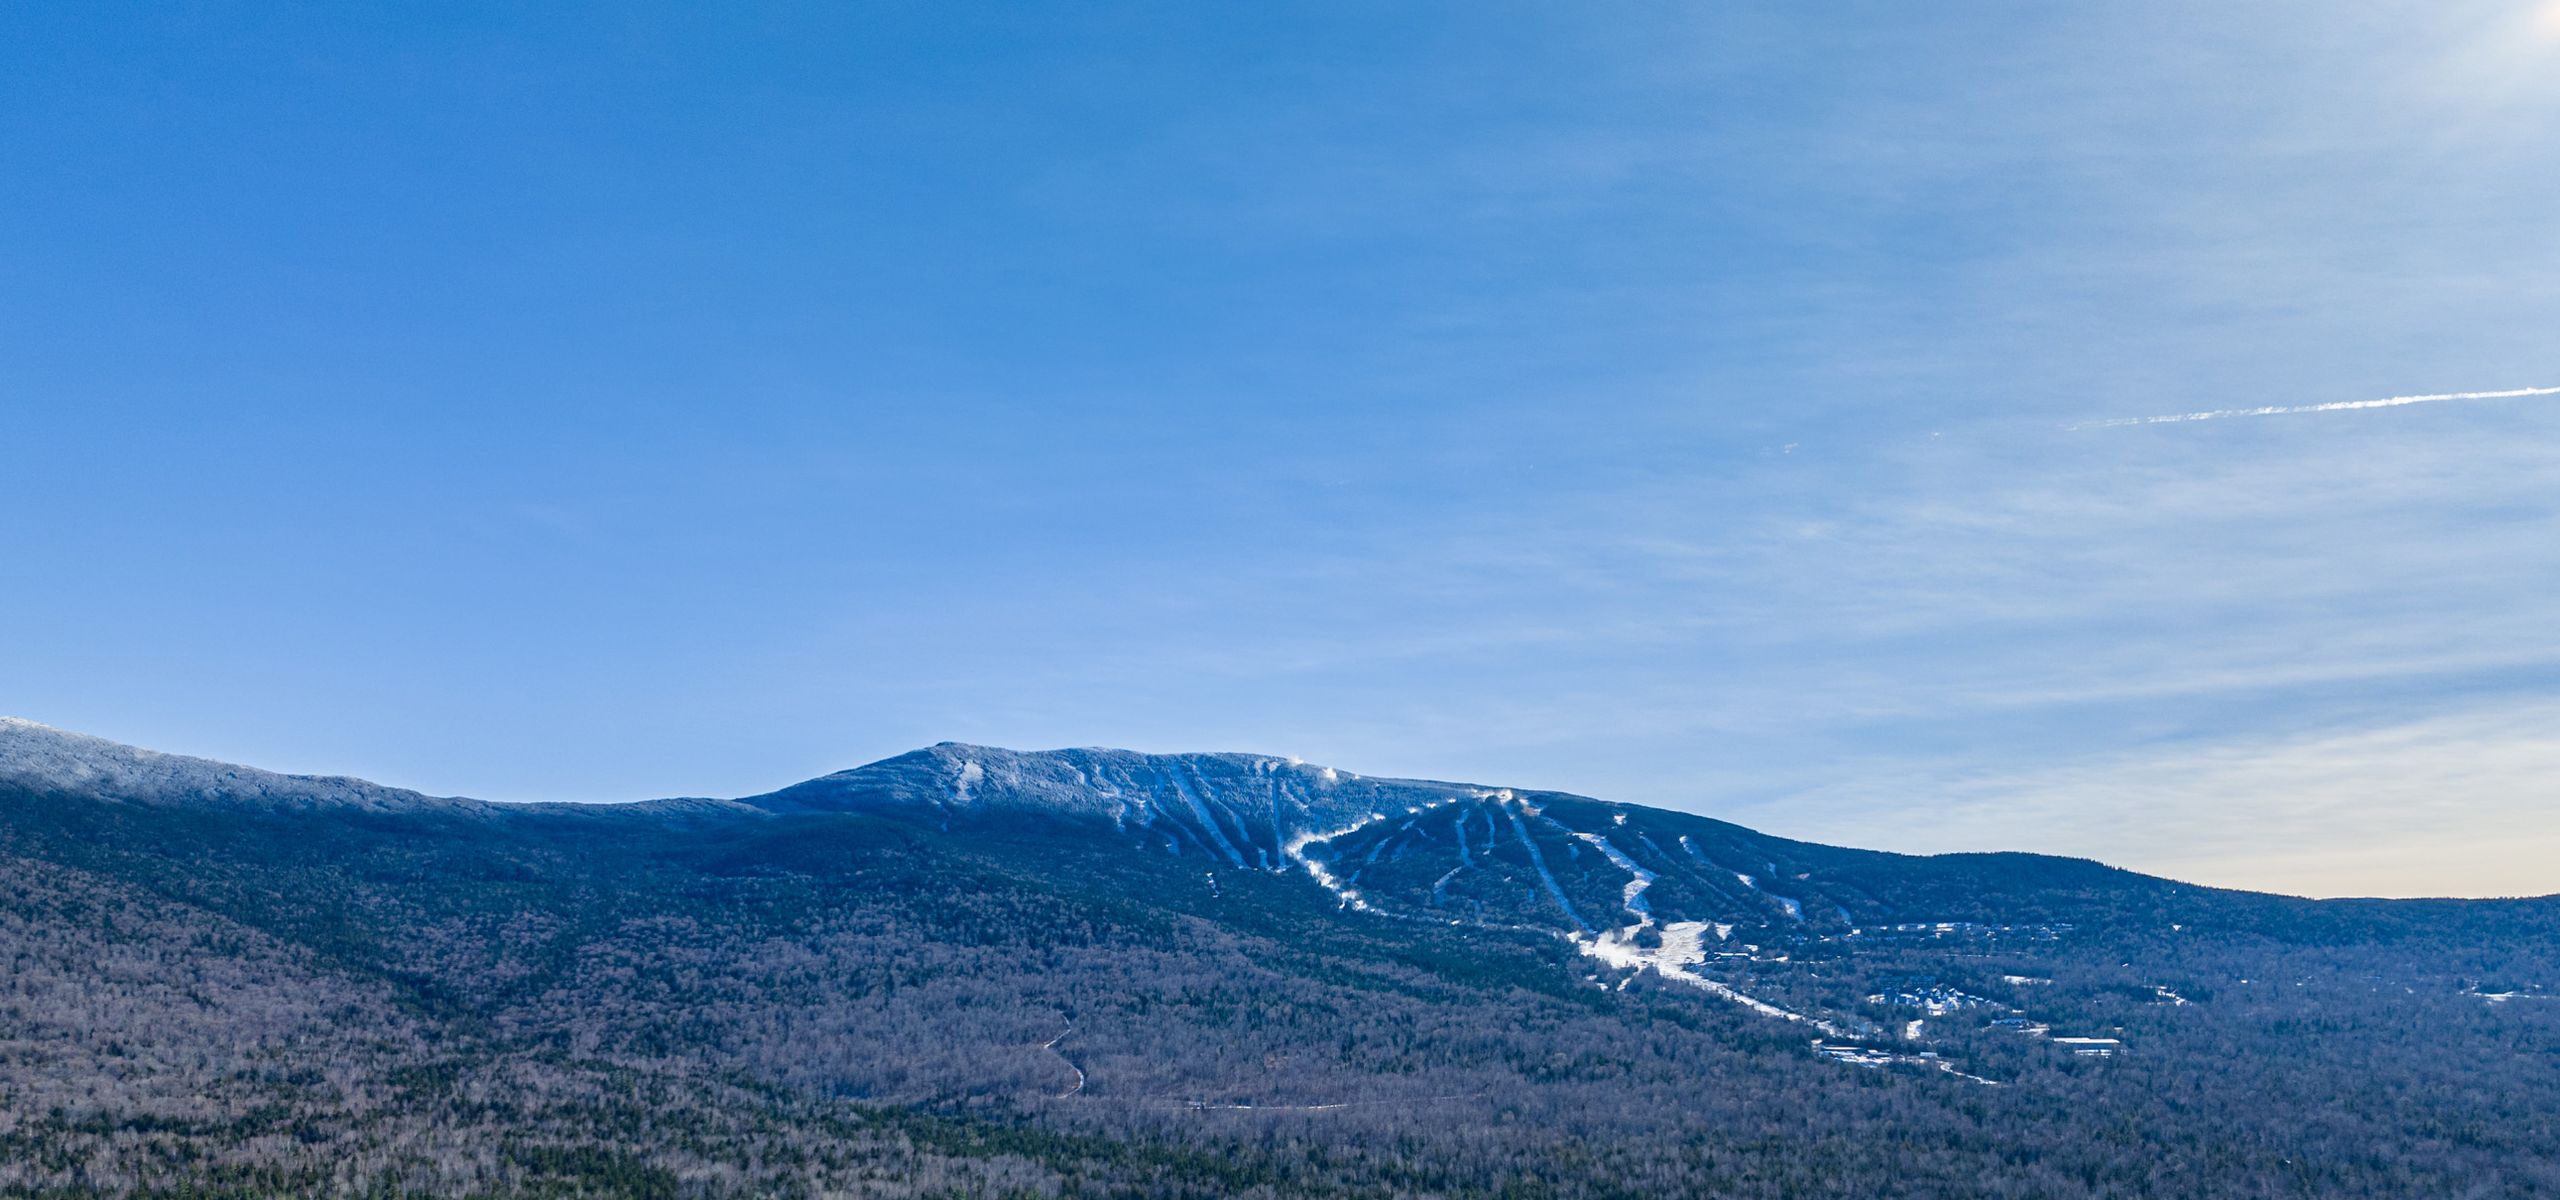 Saddleback Mountain in Rangeley, Maine